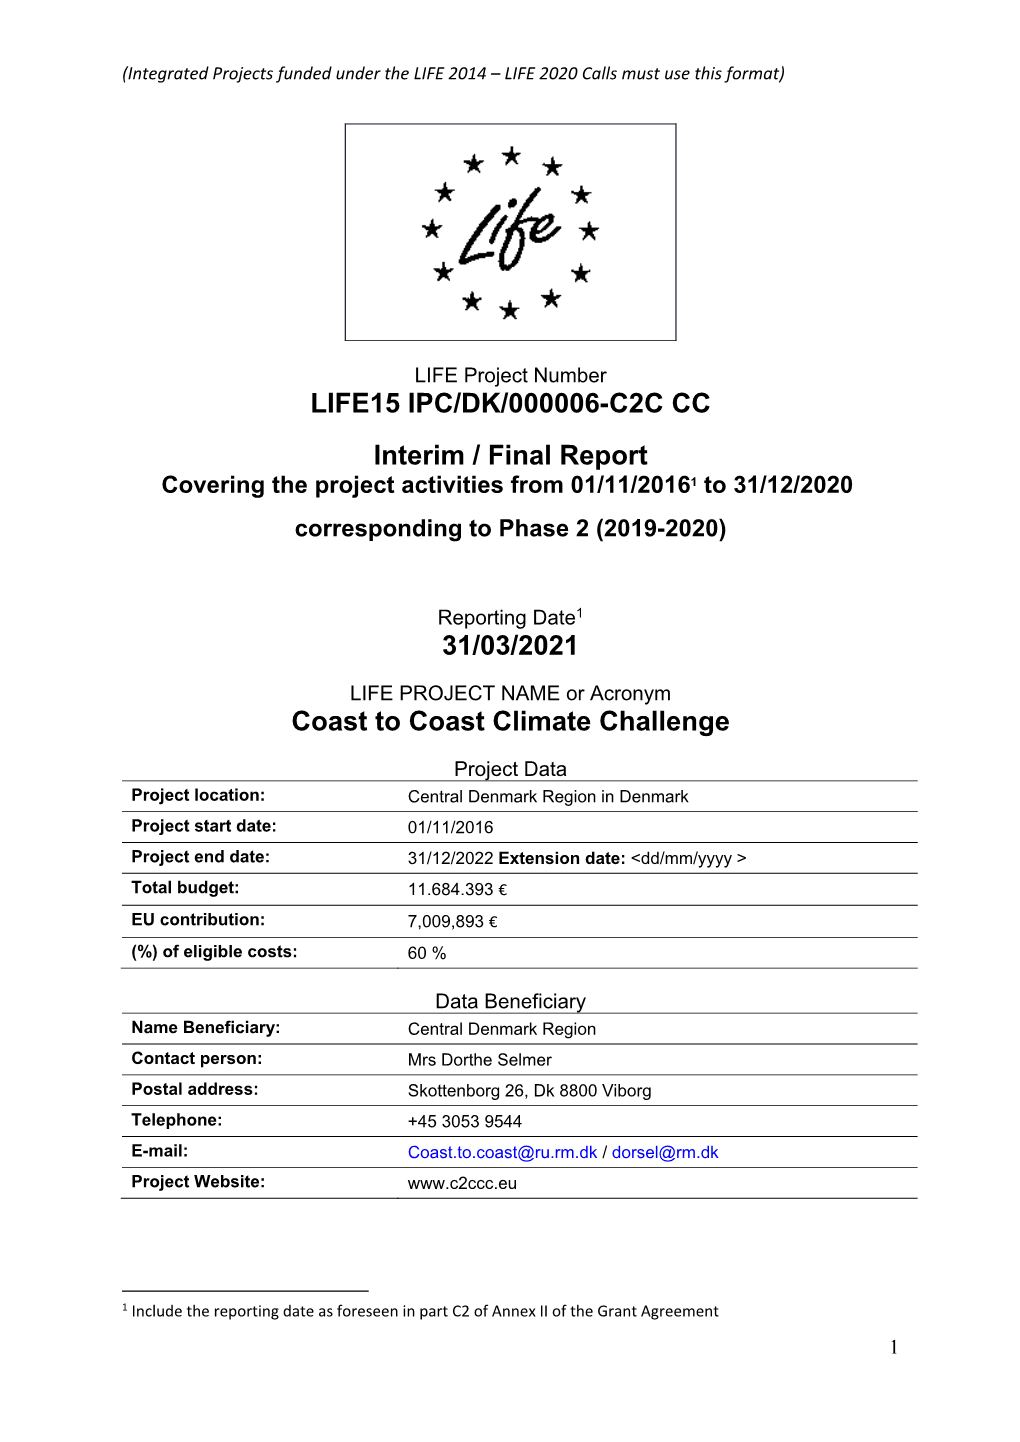 LIFE15 IPC/DK/000006-C2C CC Interim / Final Report 31/03/2021 Coast to Coast Climate Challenge